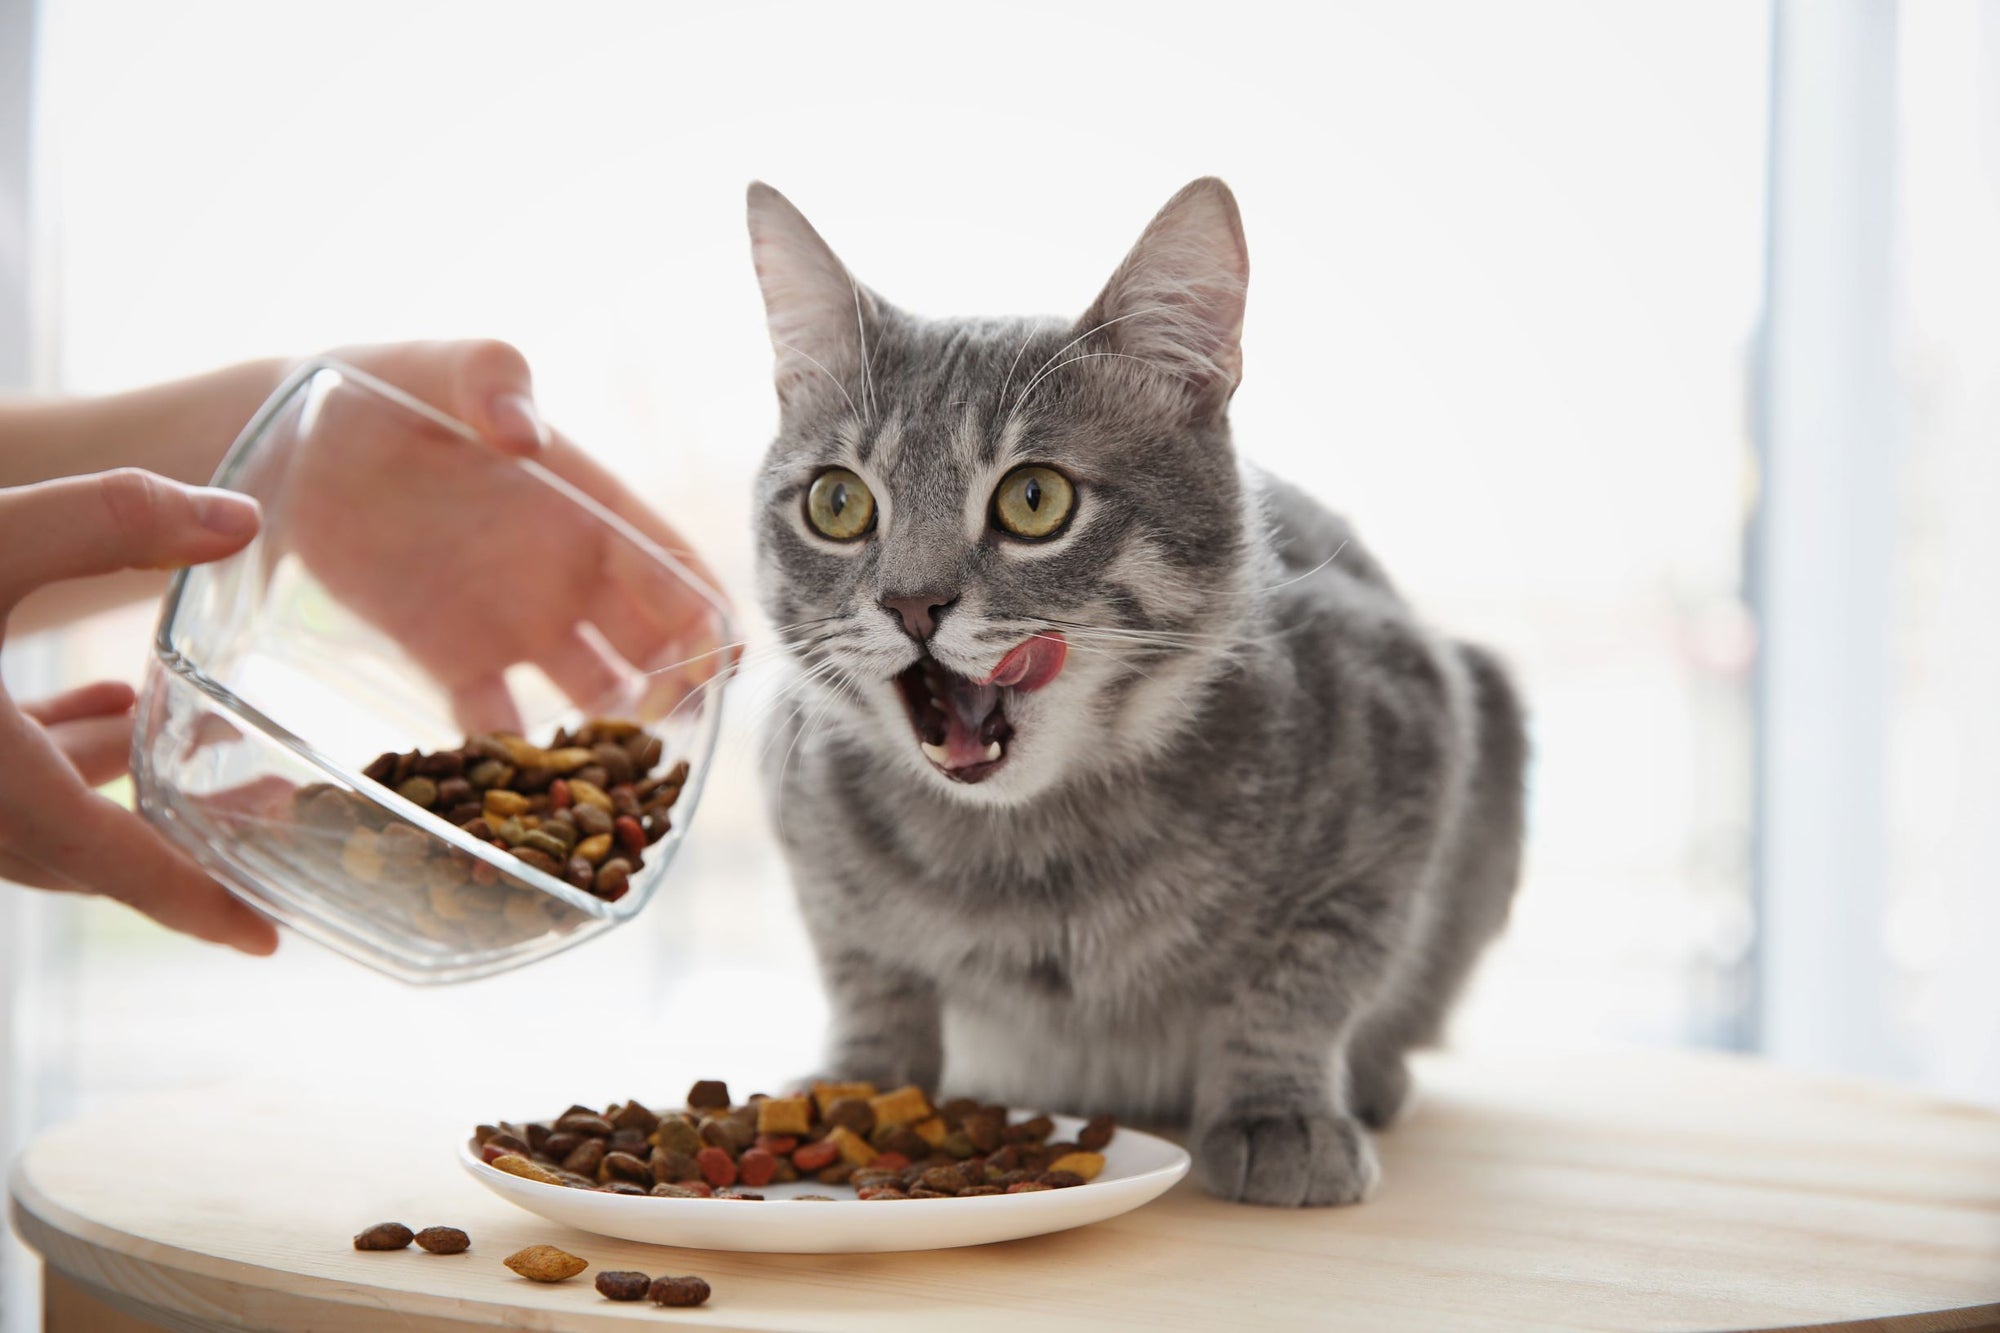 Cat enjoying cat food